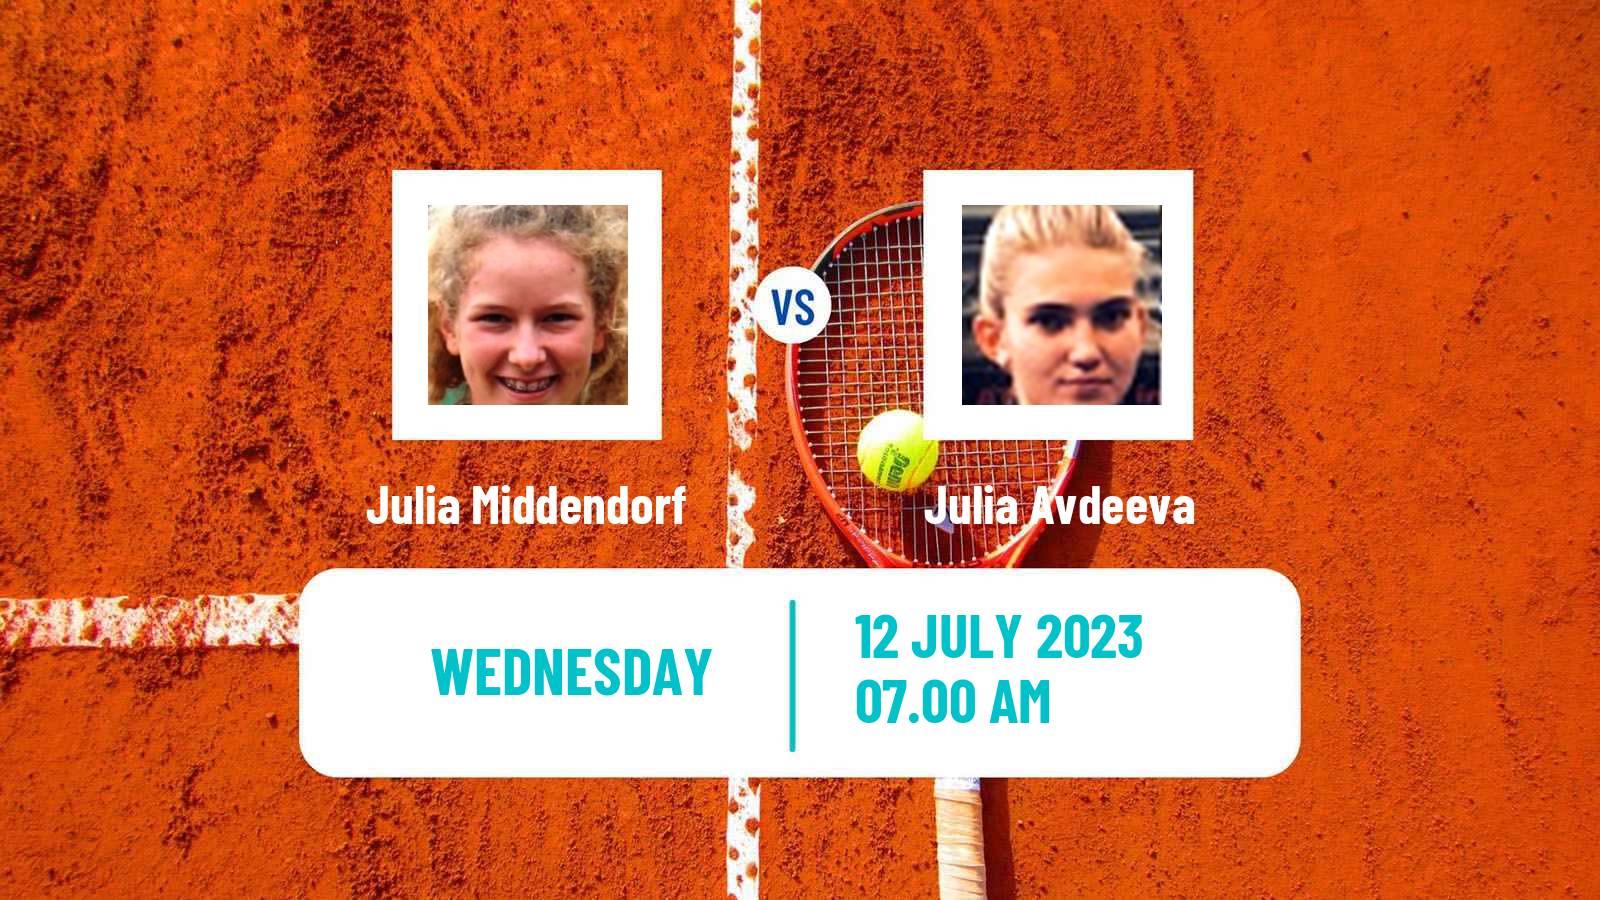 Tennis ITF W25 Aschaffenburg Women Julia Middendorf - Julia Avdeeva